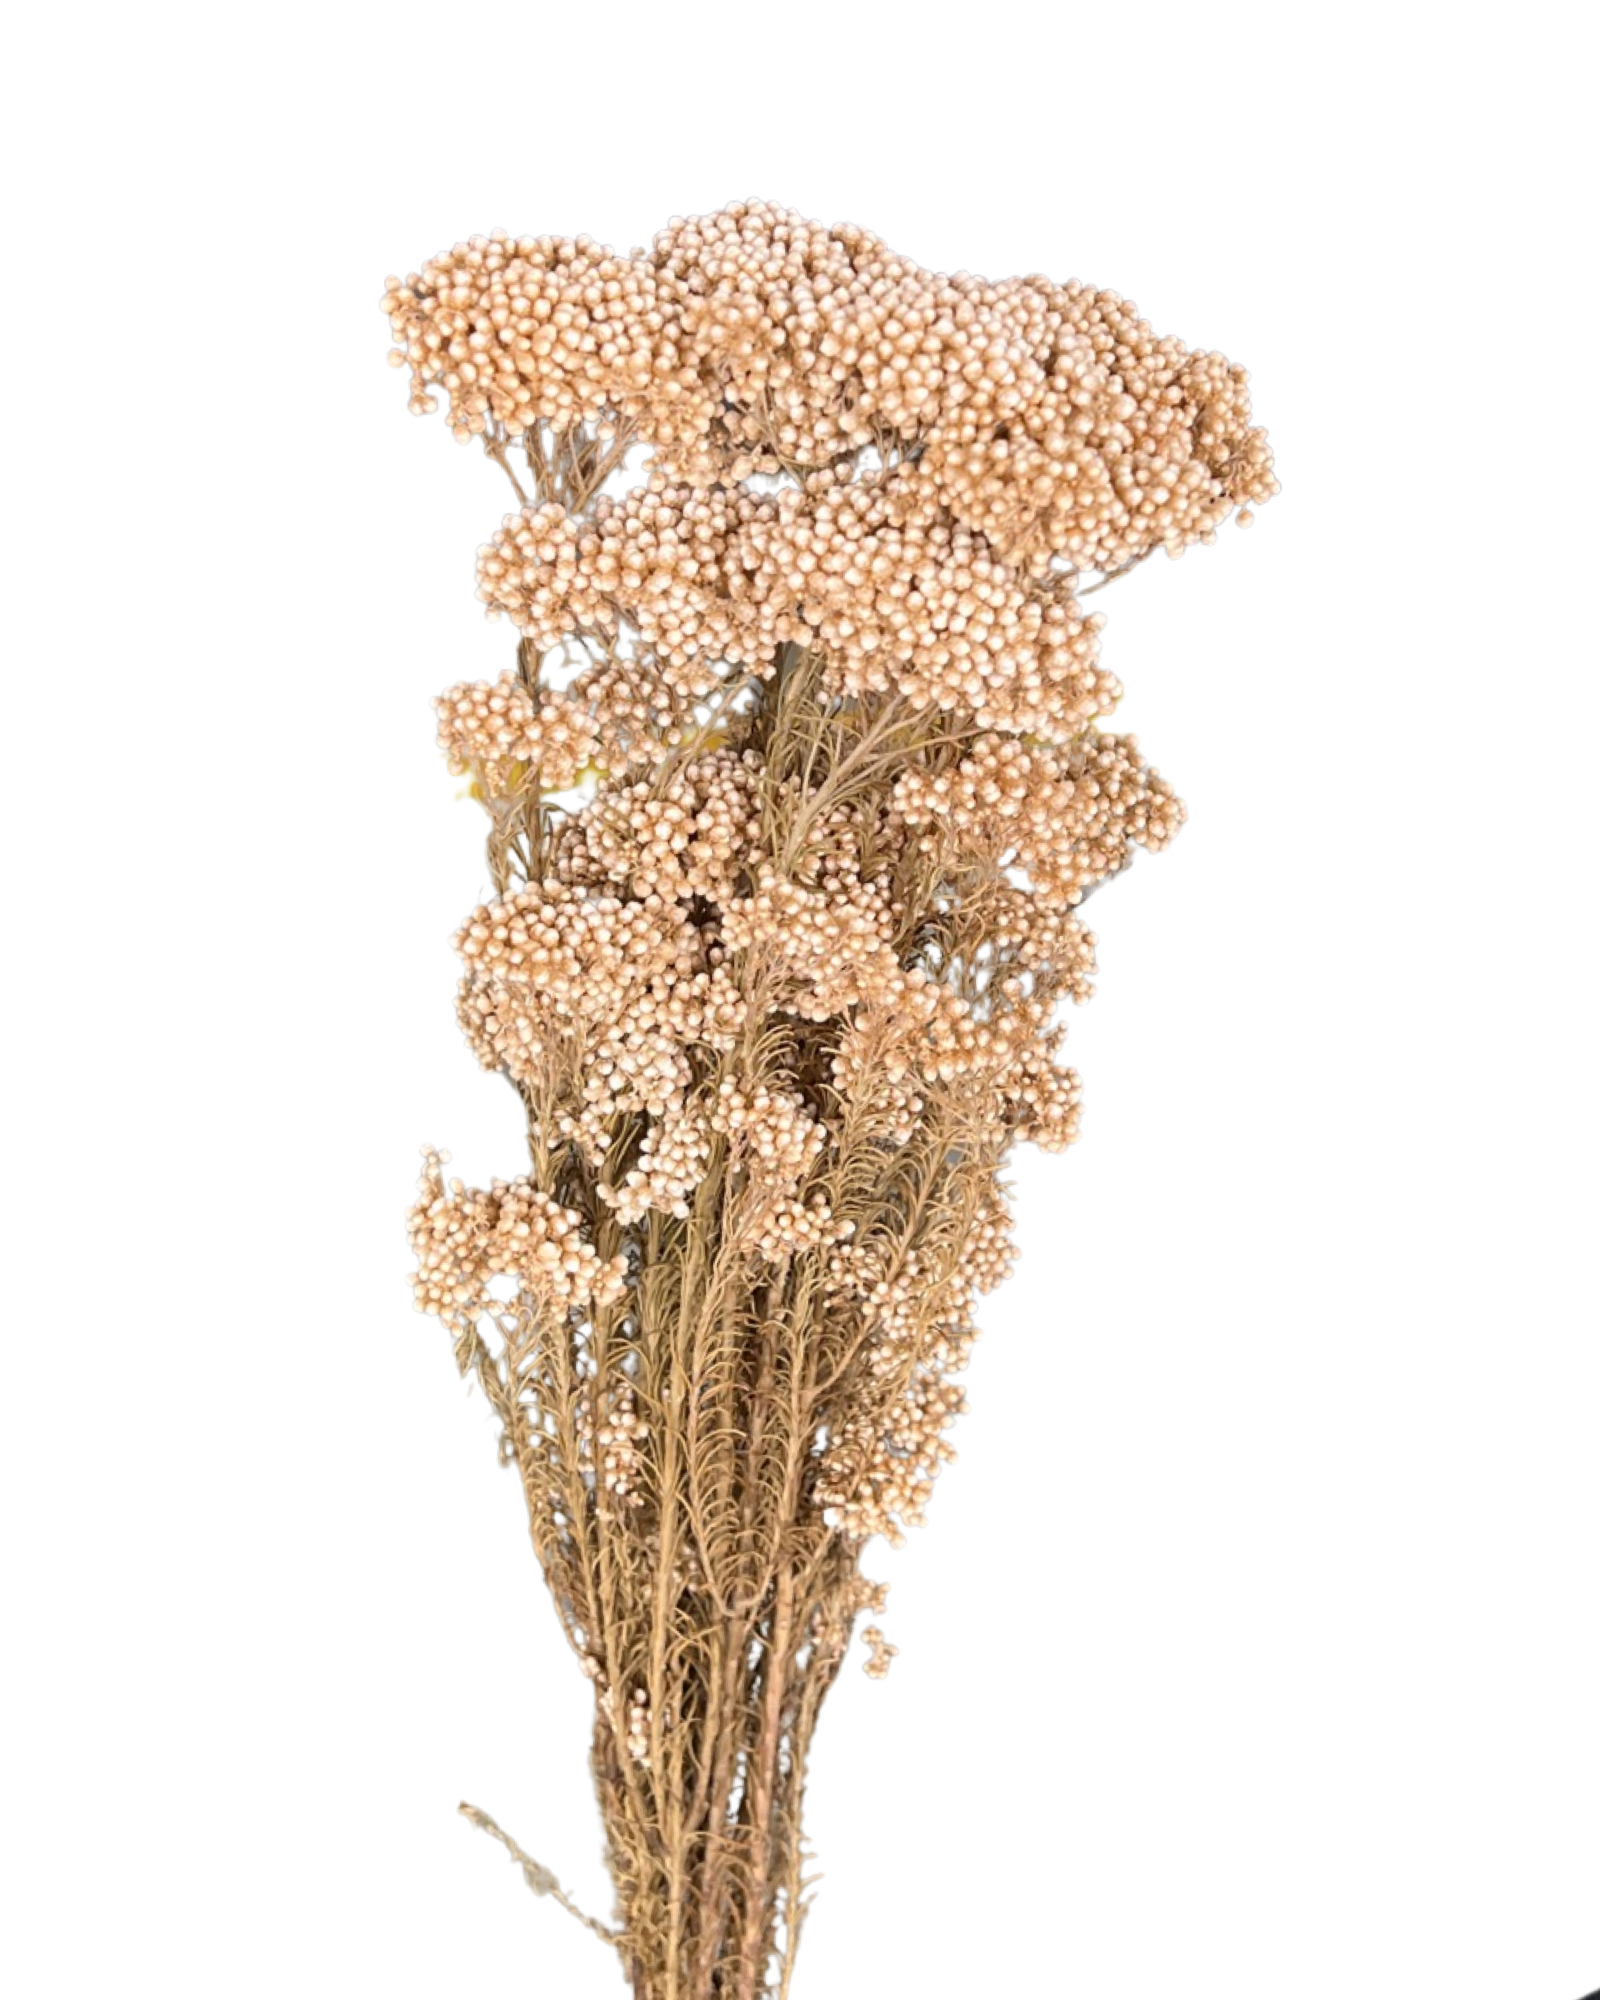 Rice flowers(OZOTHAMNUS DIAOSMIFOLIUS) - Latte